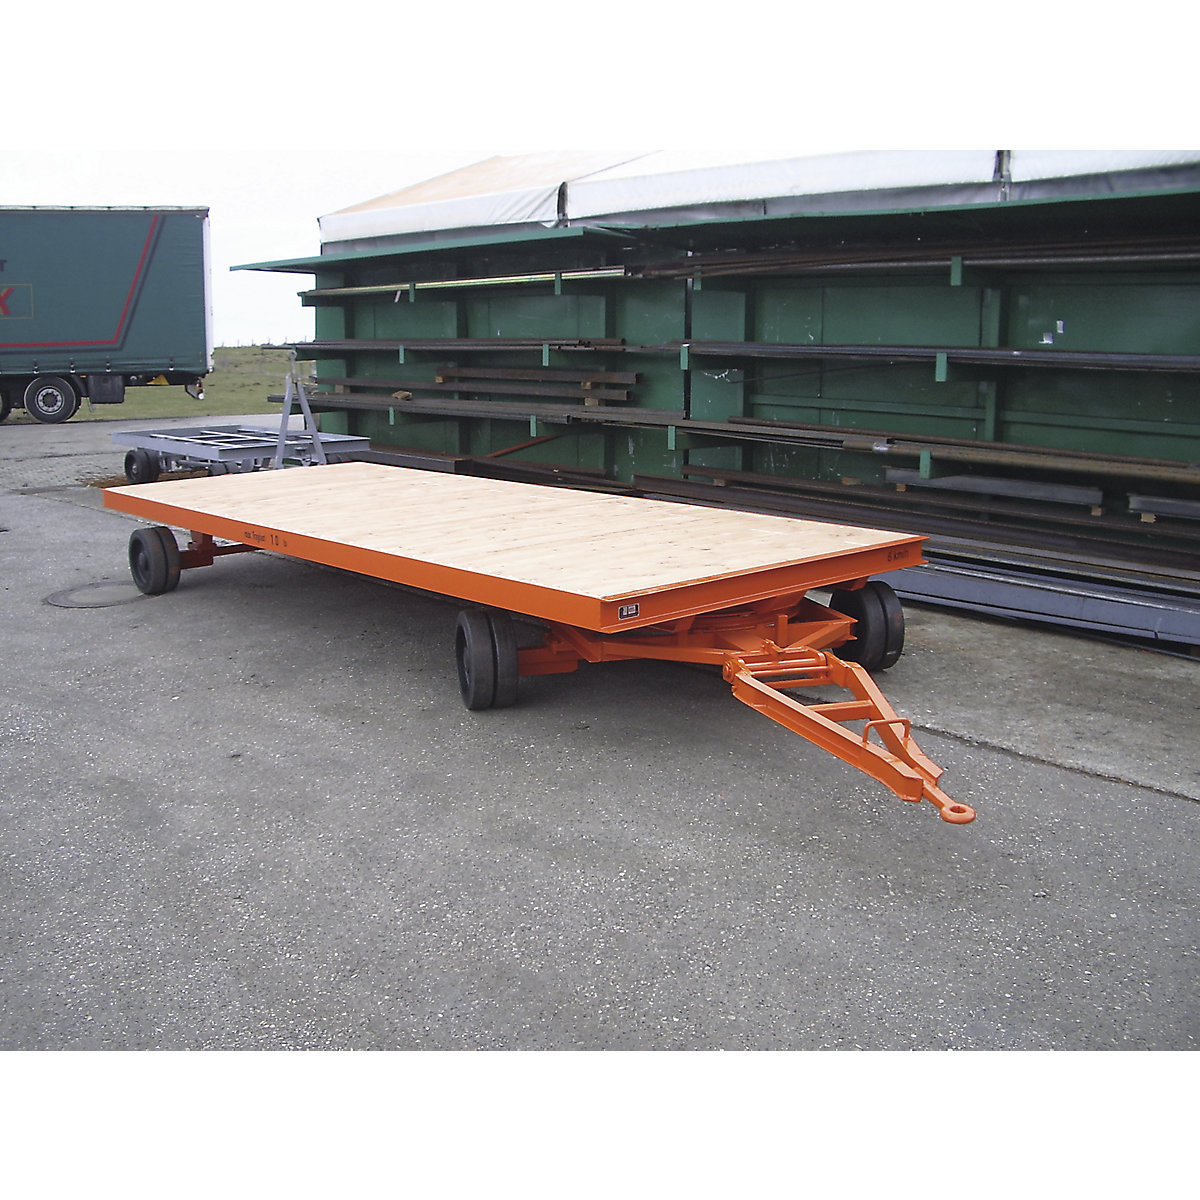 Heavy goods trailer, 16 t, turntable steering, platform 3.2 x 1.6 m